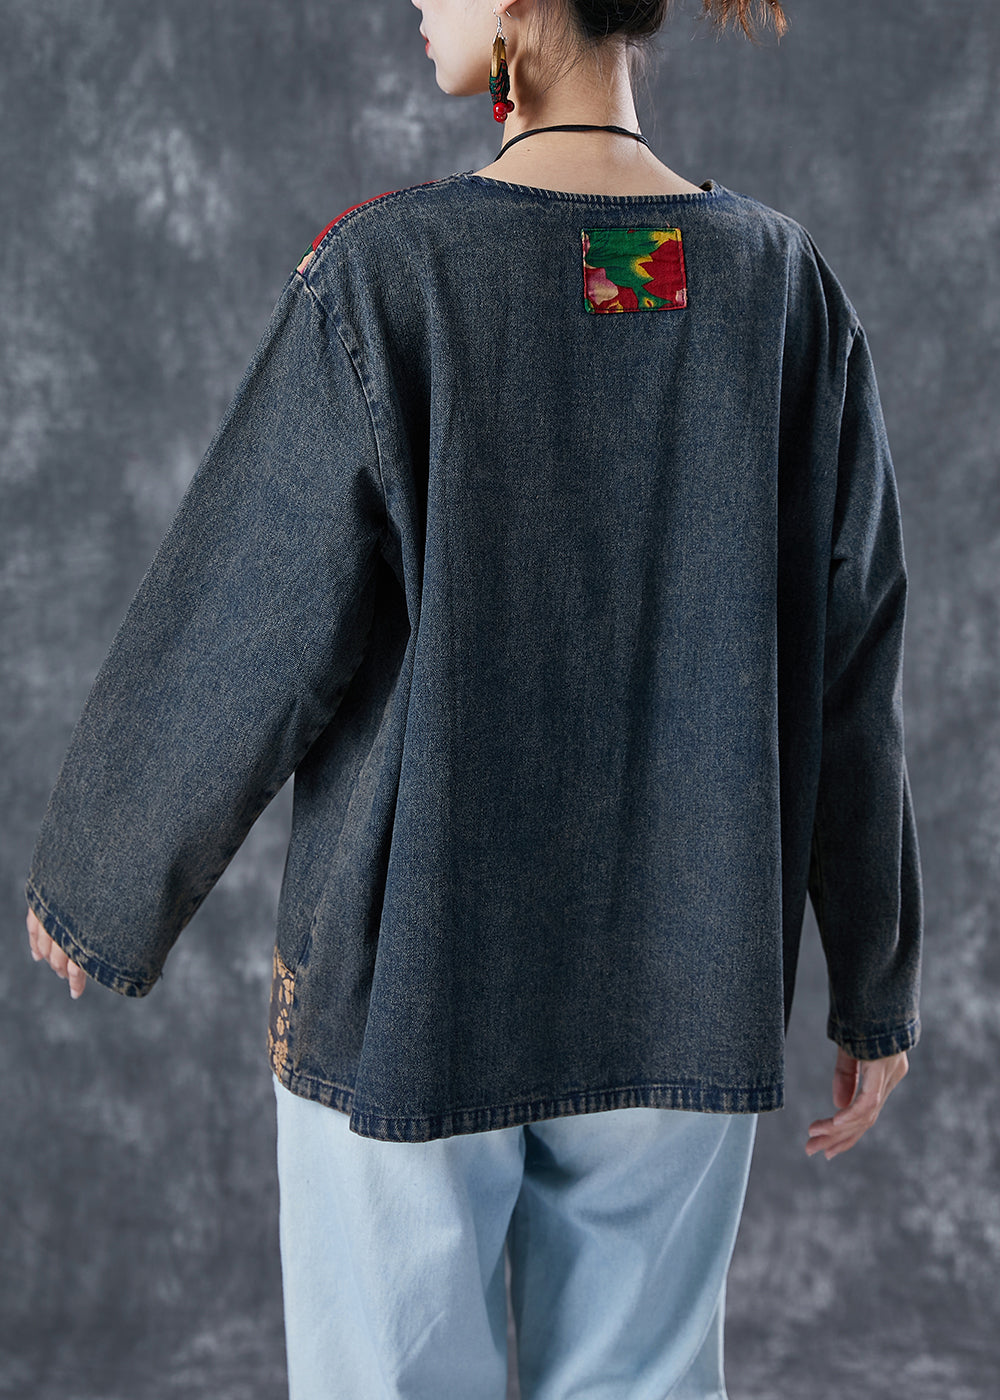 Boho Black Asymmetrical Patchwork Denim Sweatshirts Top Spring LY5621 - fabuloryshop